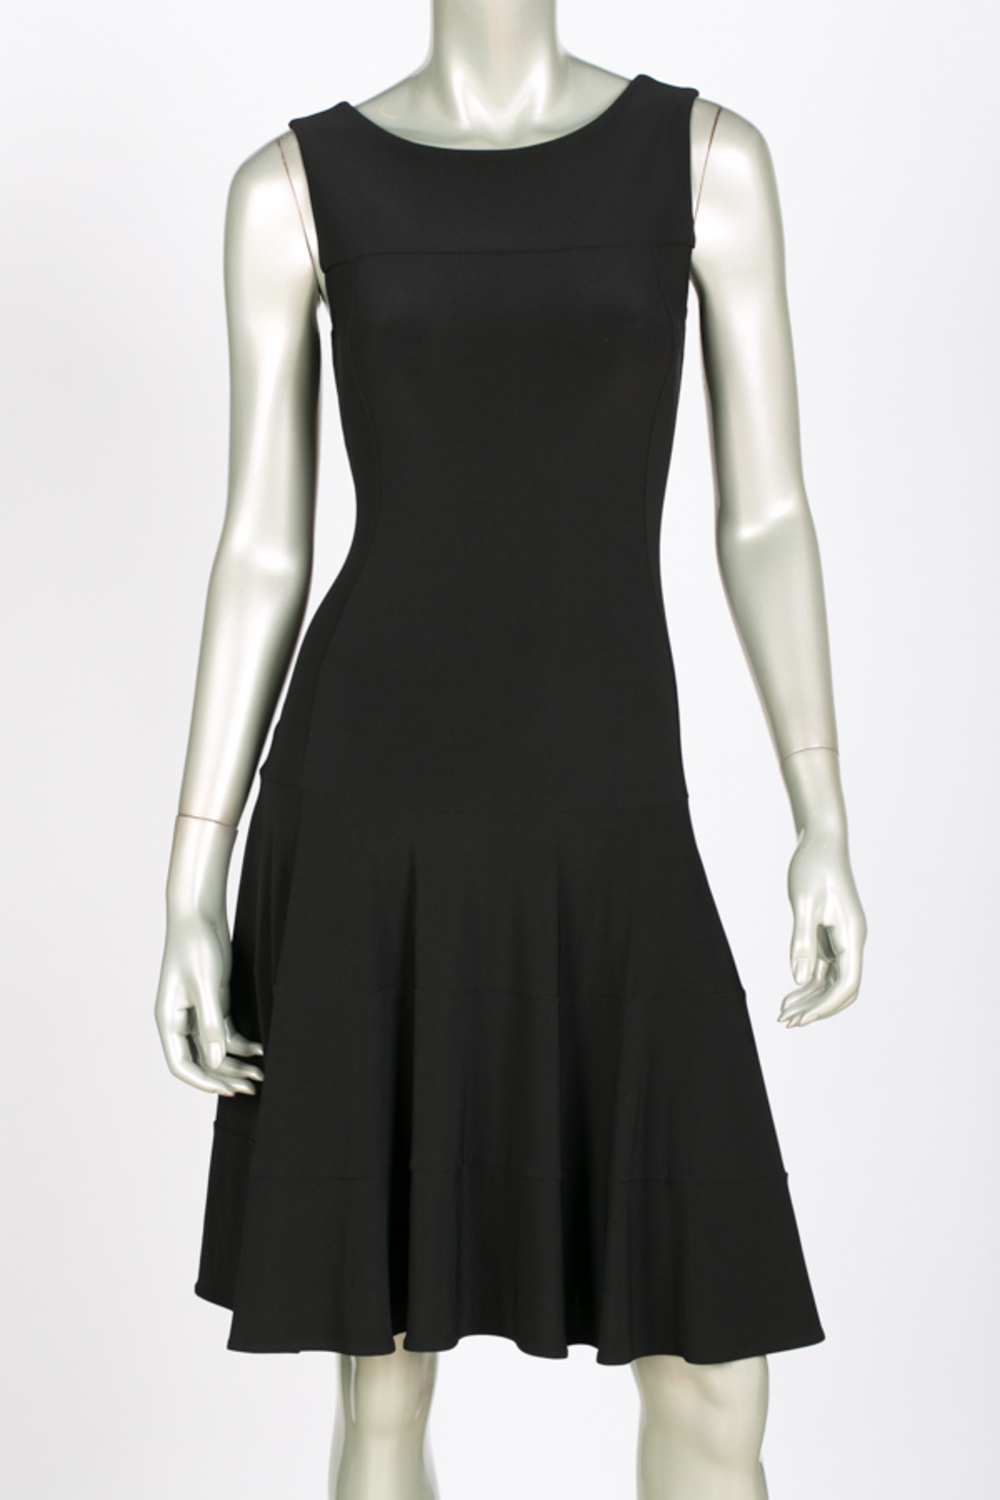 Joseph Ribkoff dress style 143011. Black/black